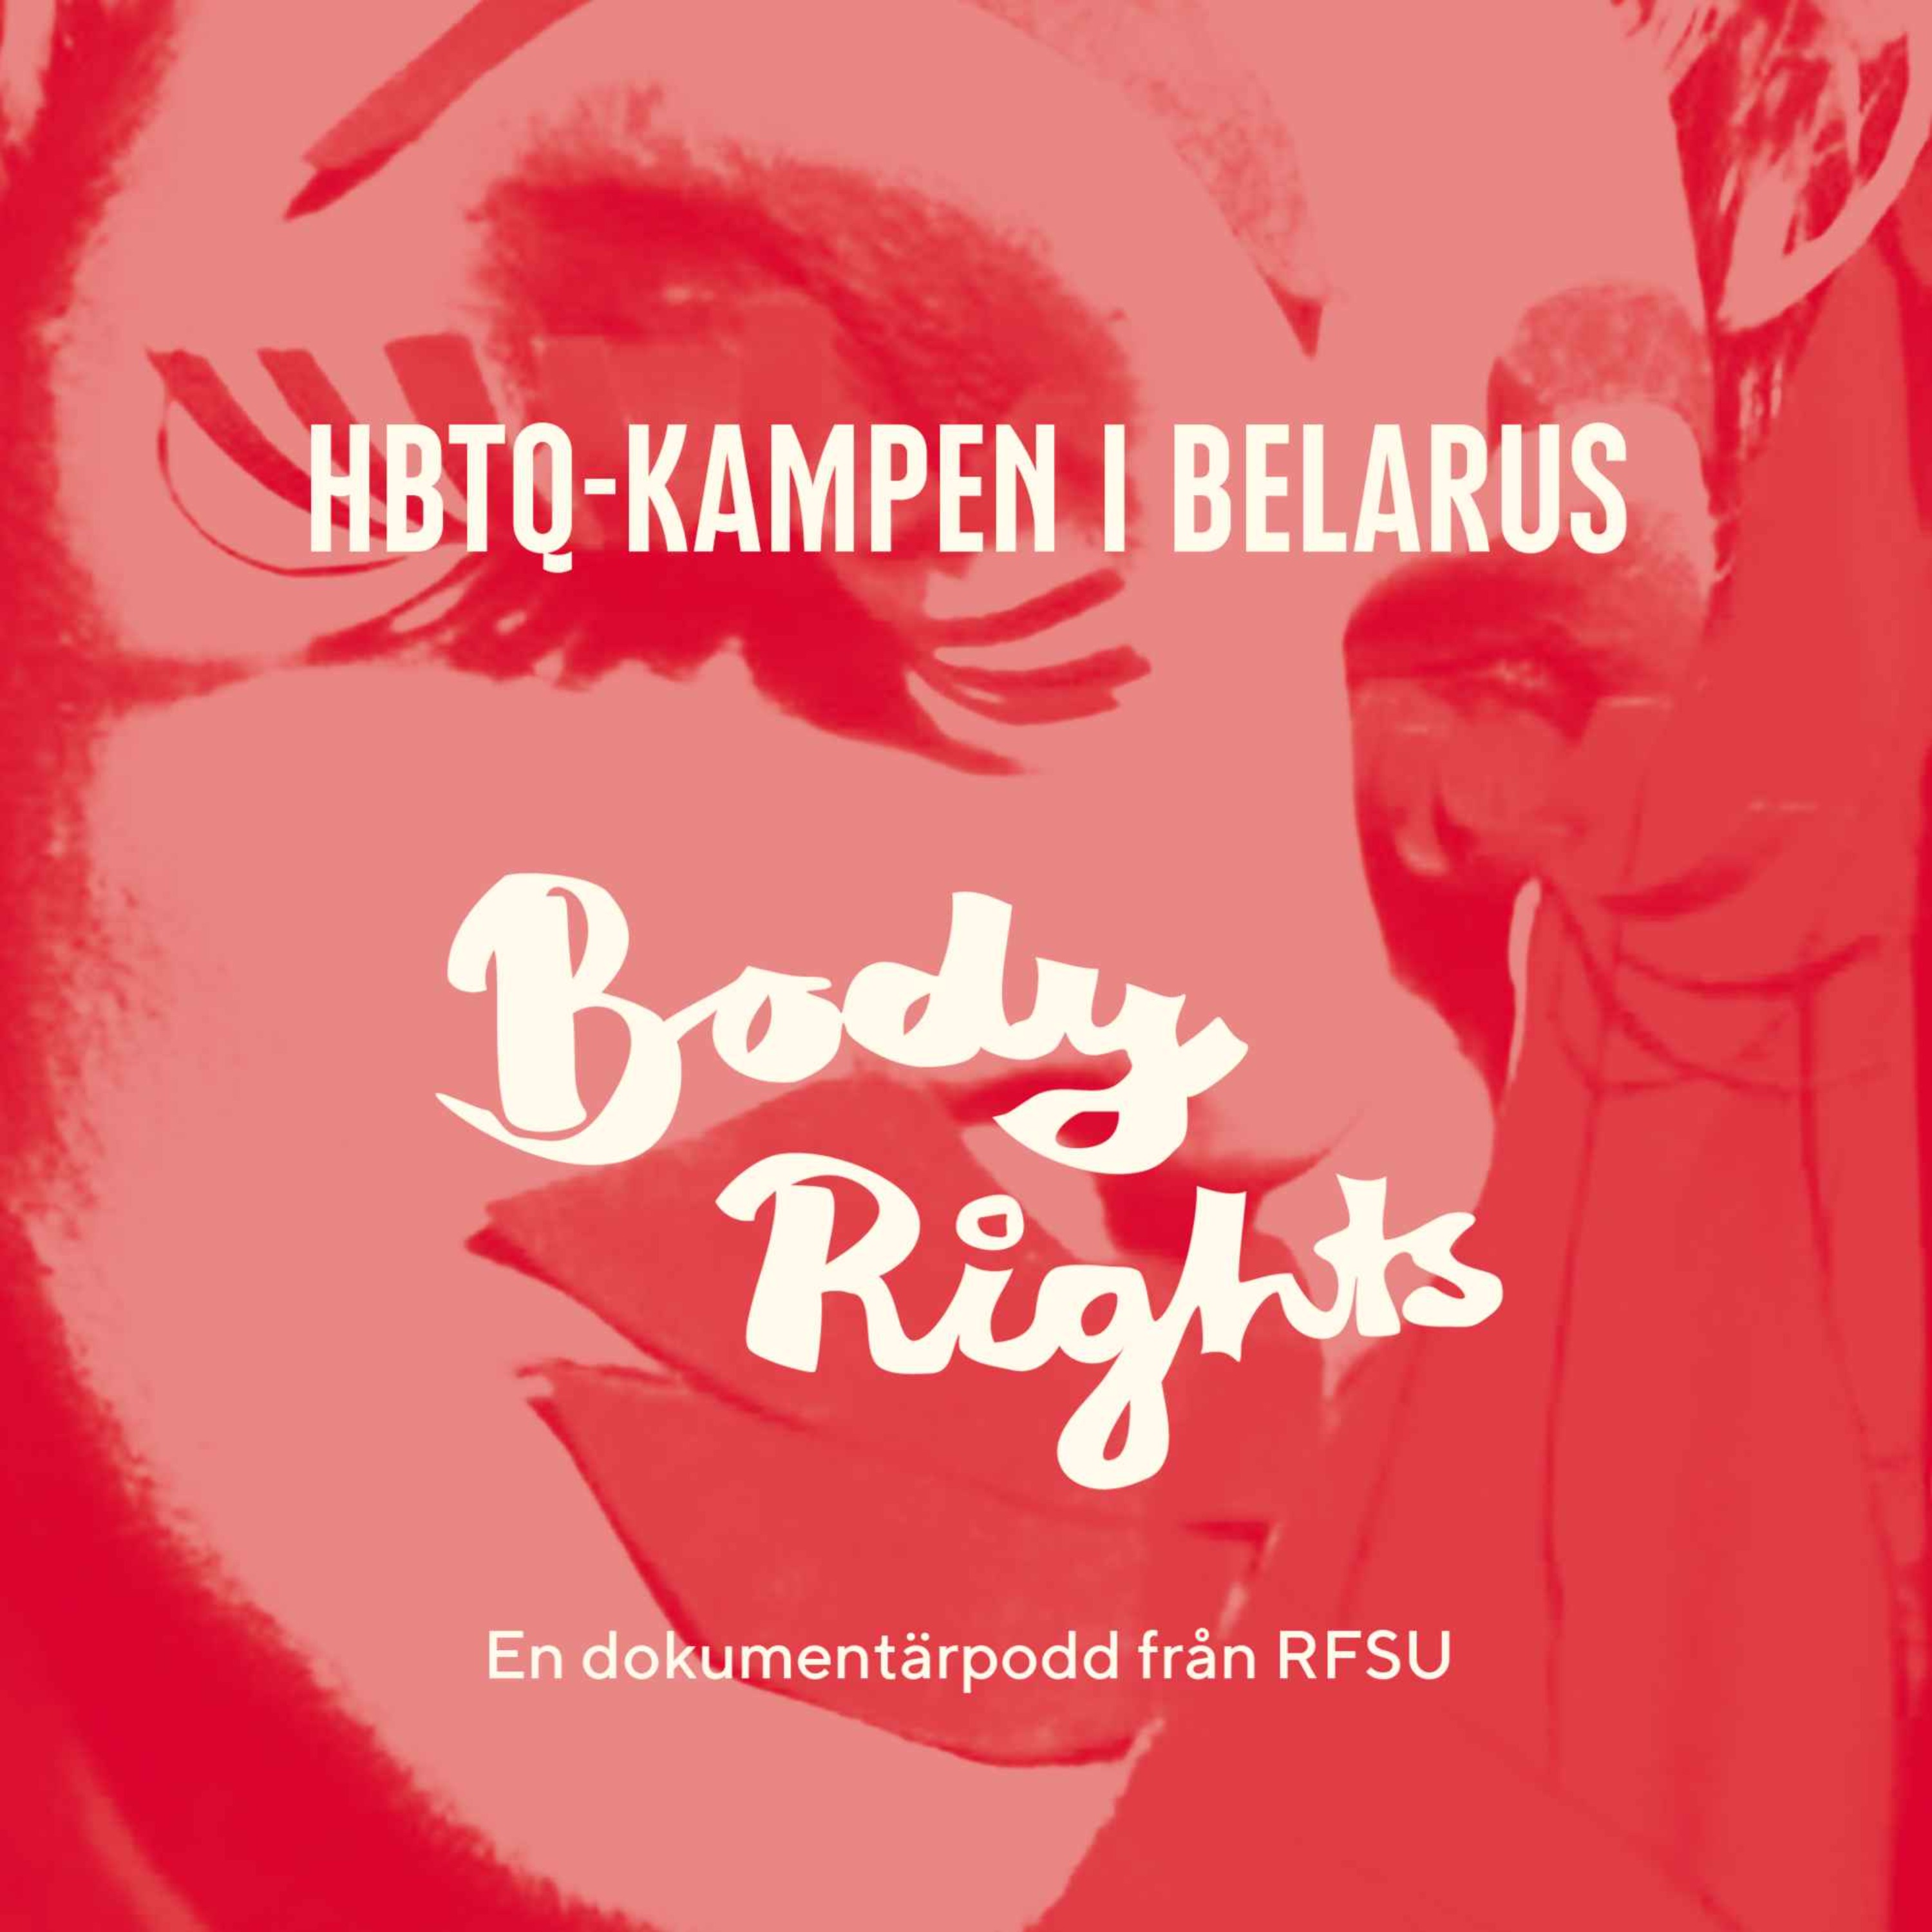 Hbtq-kampen i Belarus